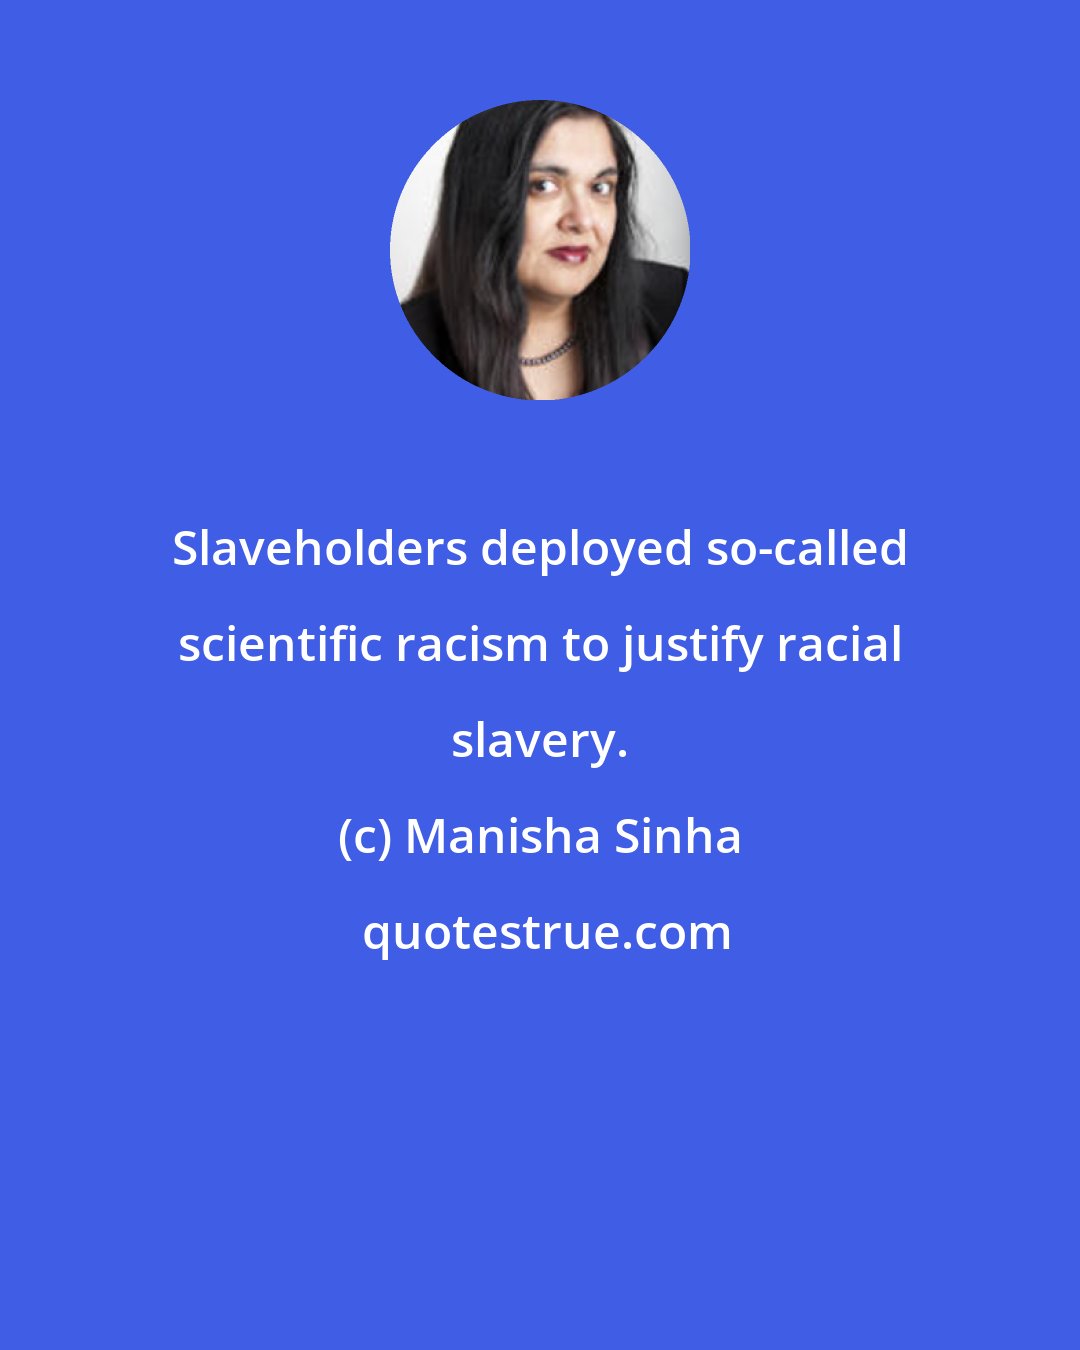 Manisha Sinha: Slaveholders deployed so-called scientific racism to justify racial slavery.